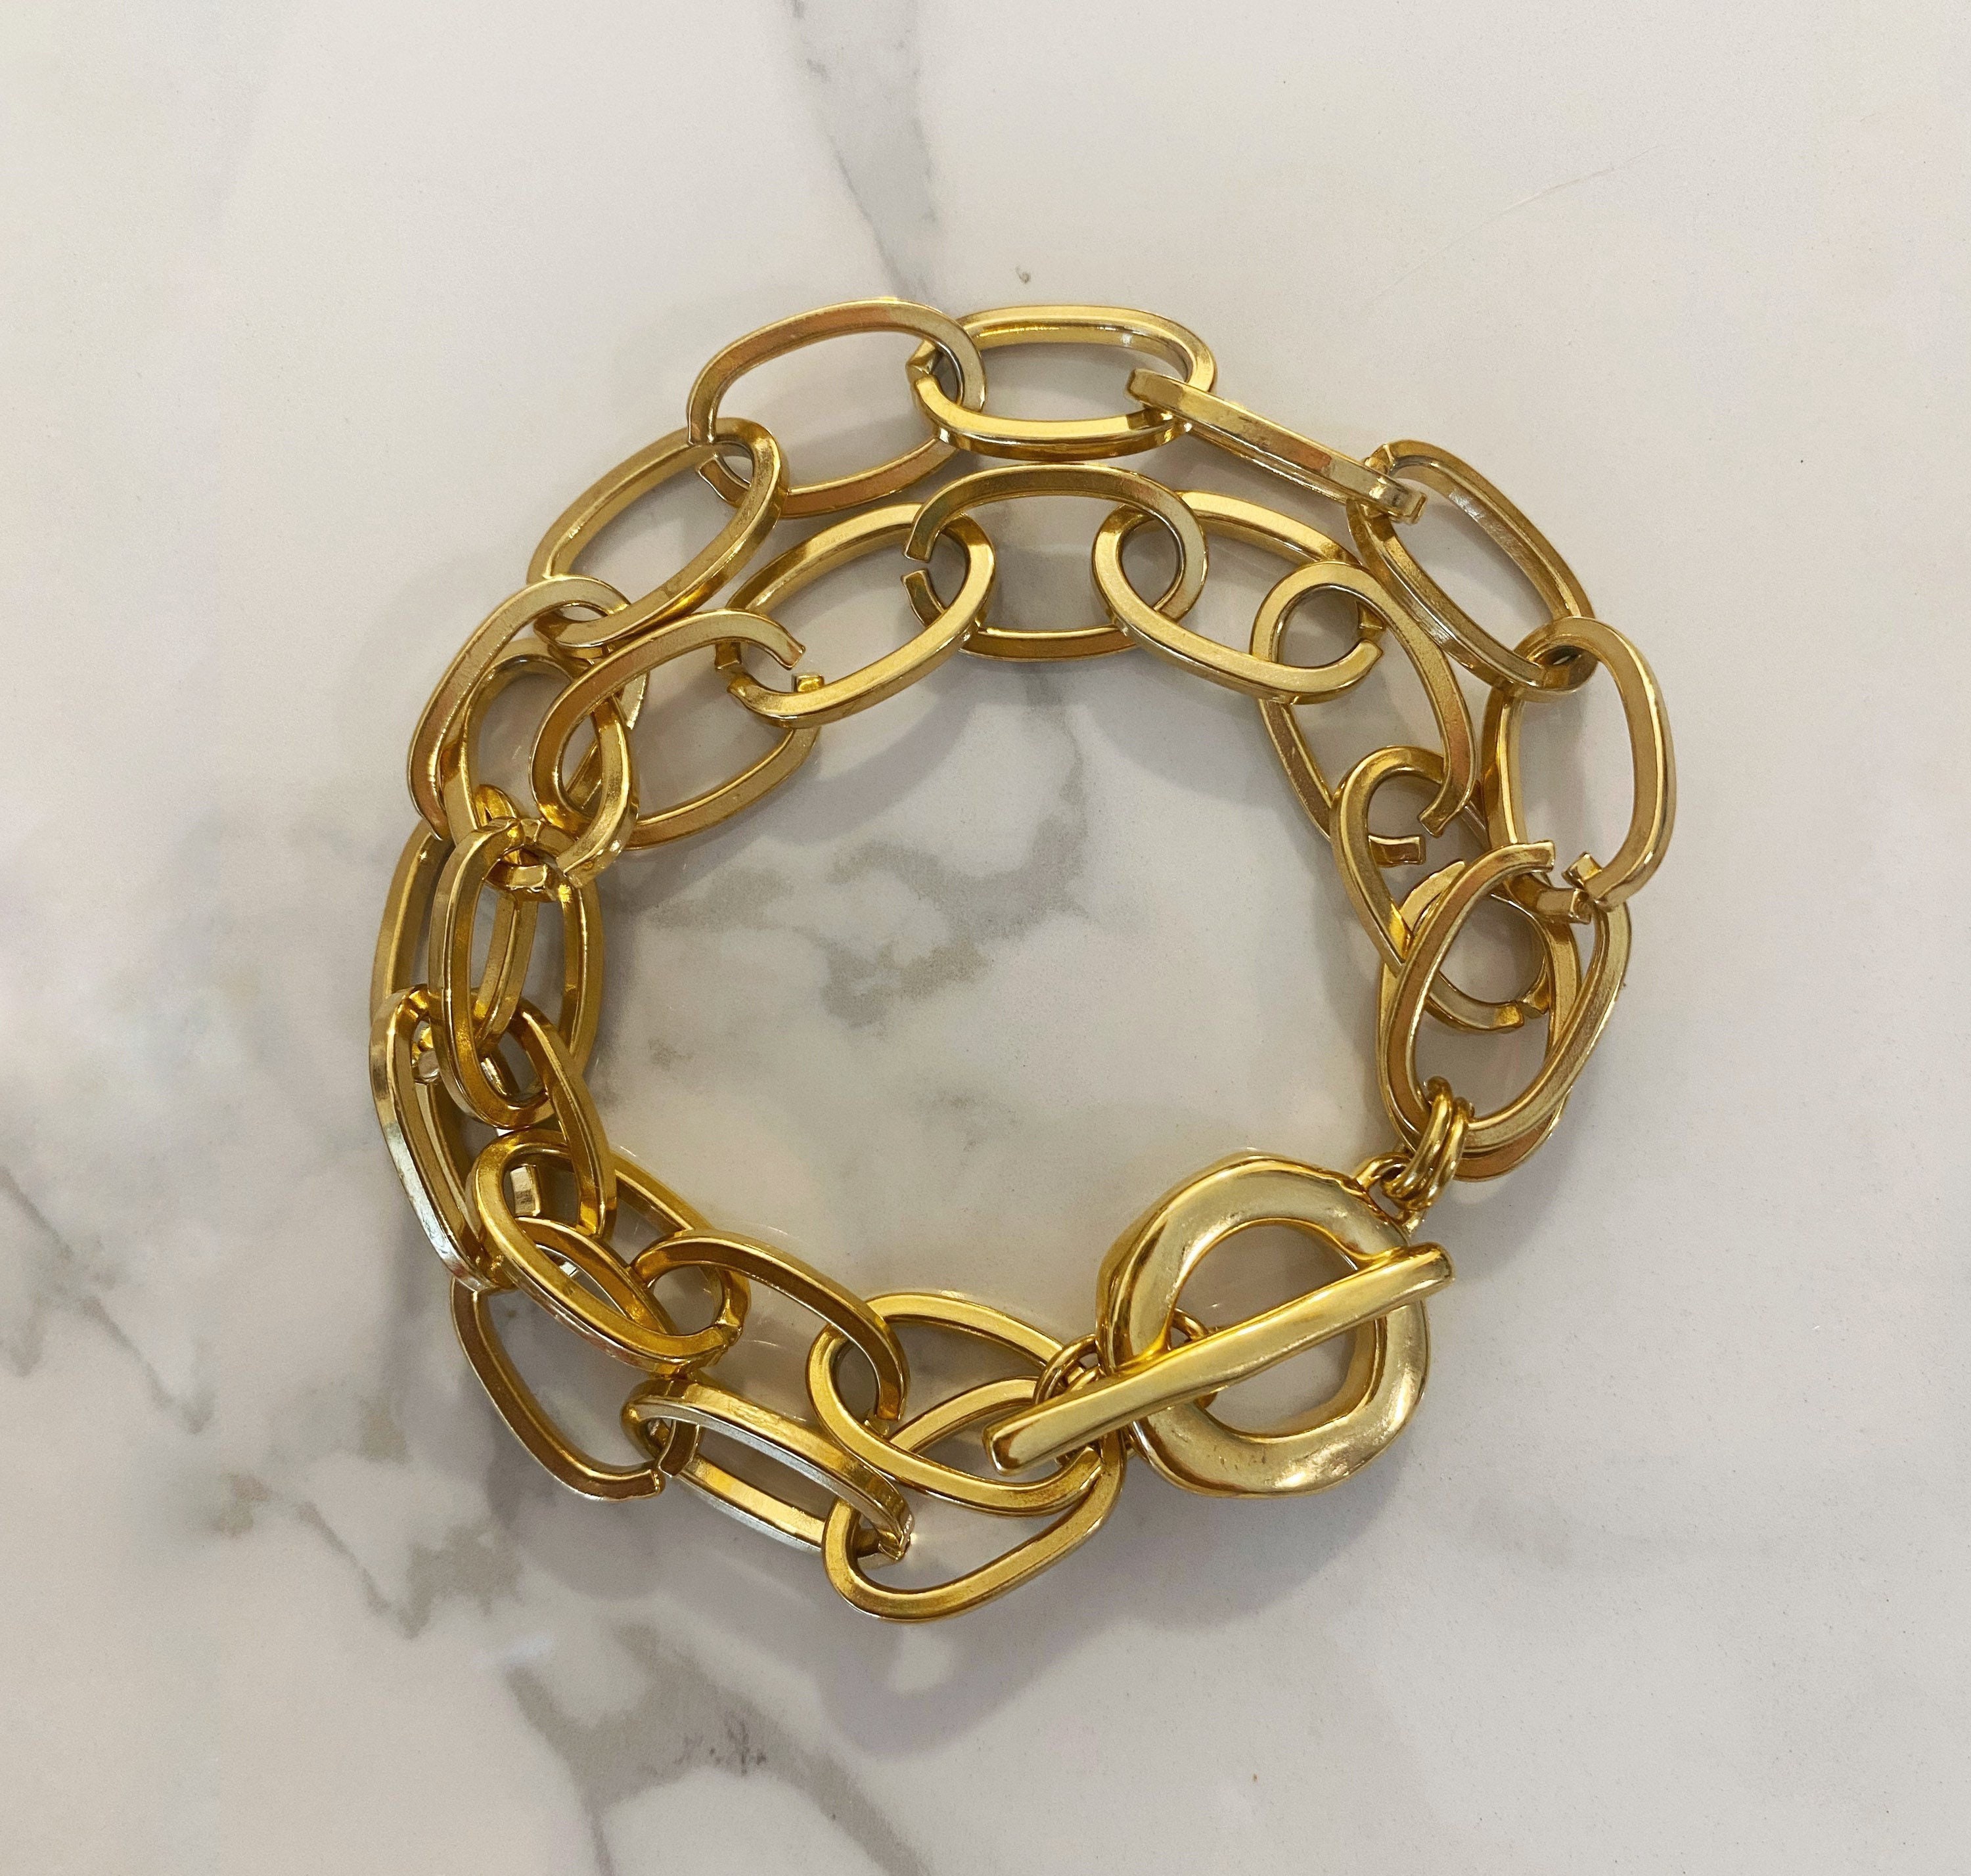 Heart Charm Toggle Bracelet in 14K Gold - 7.5